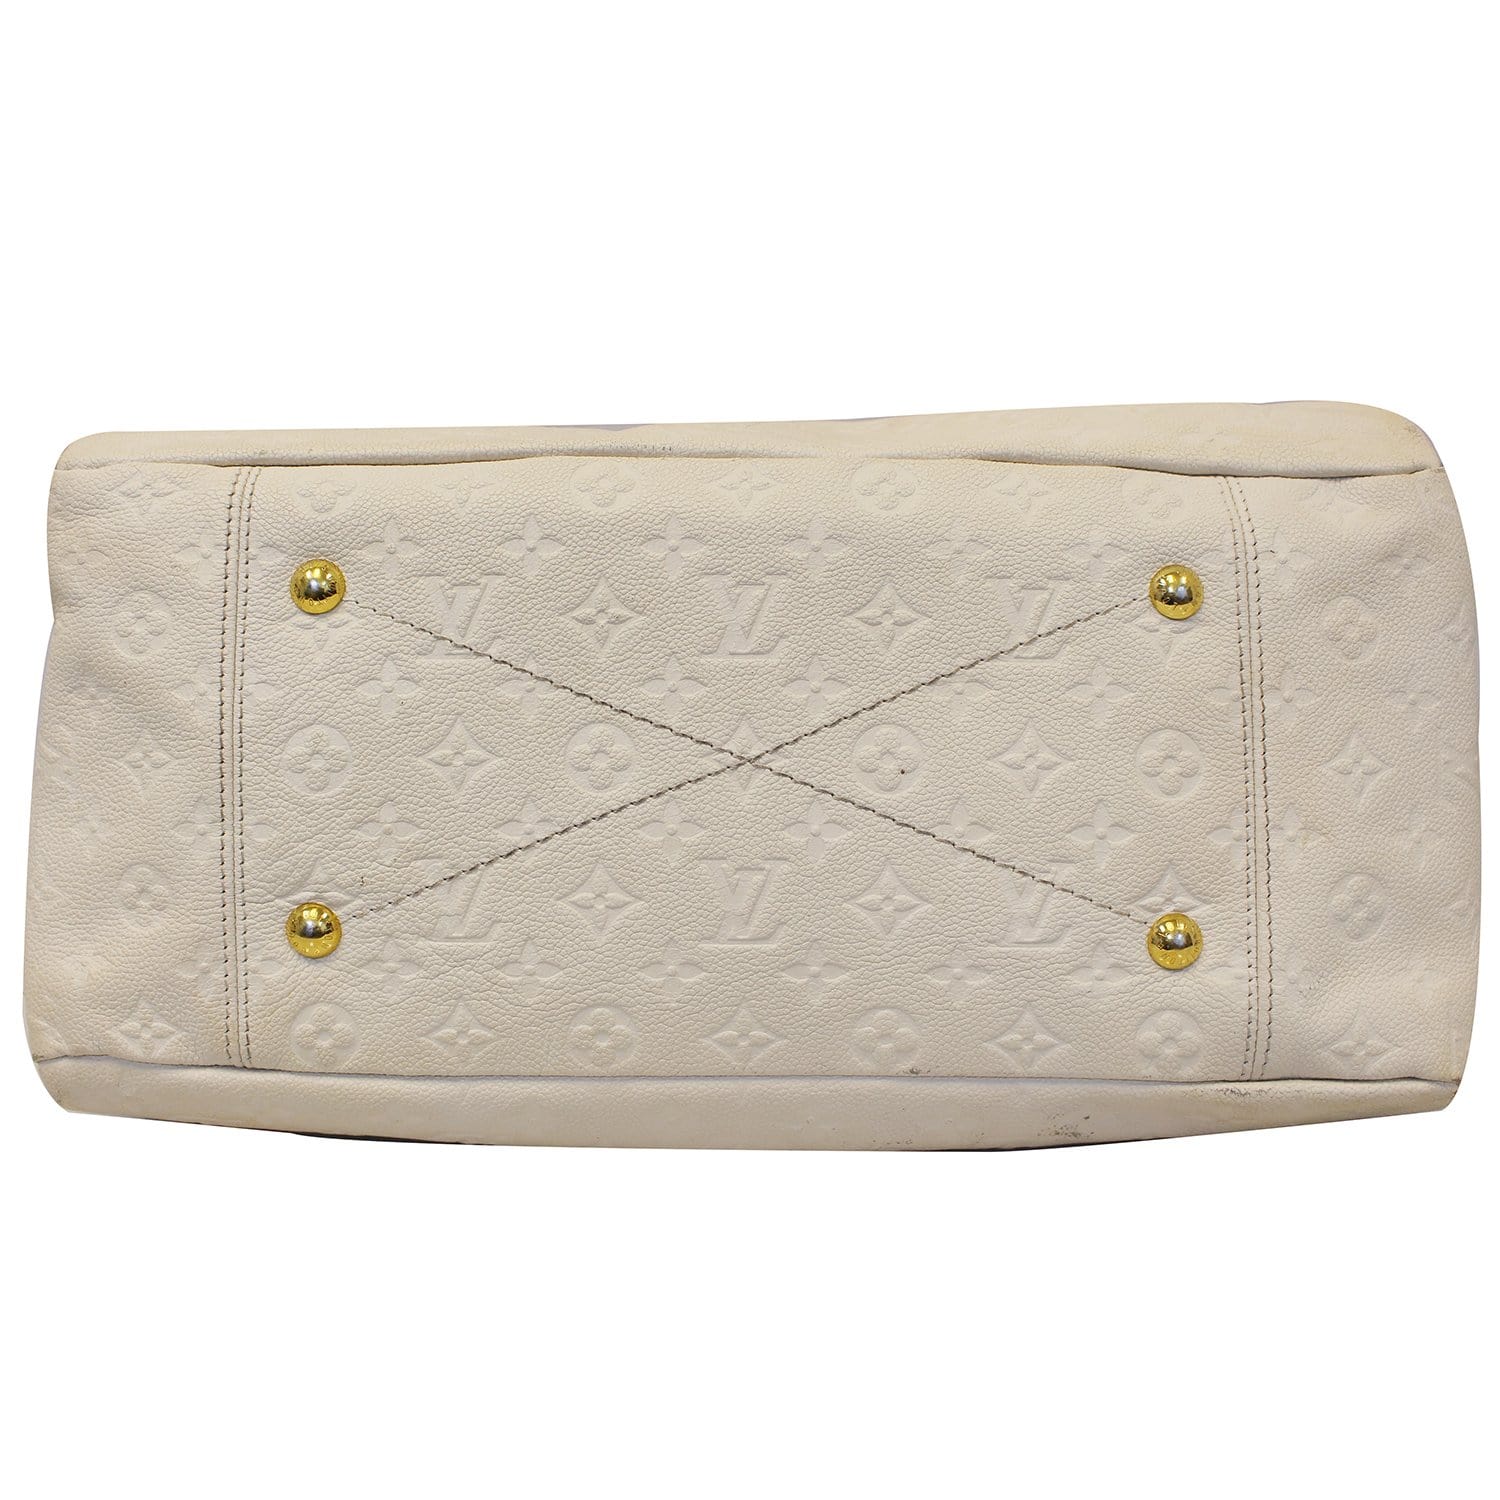 Louis Vuitton - Authenticated Artsy Handbag - Leather Beige Plain for Women, Good Condition